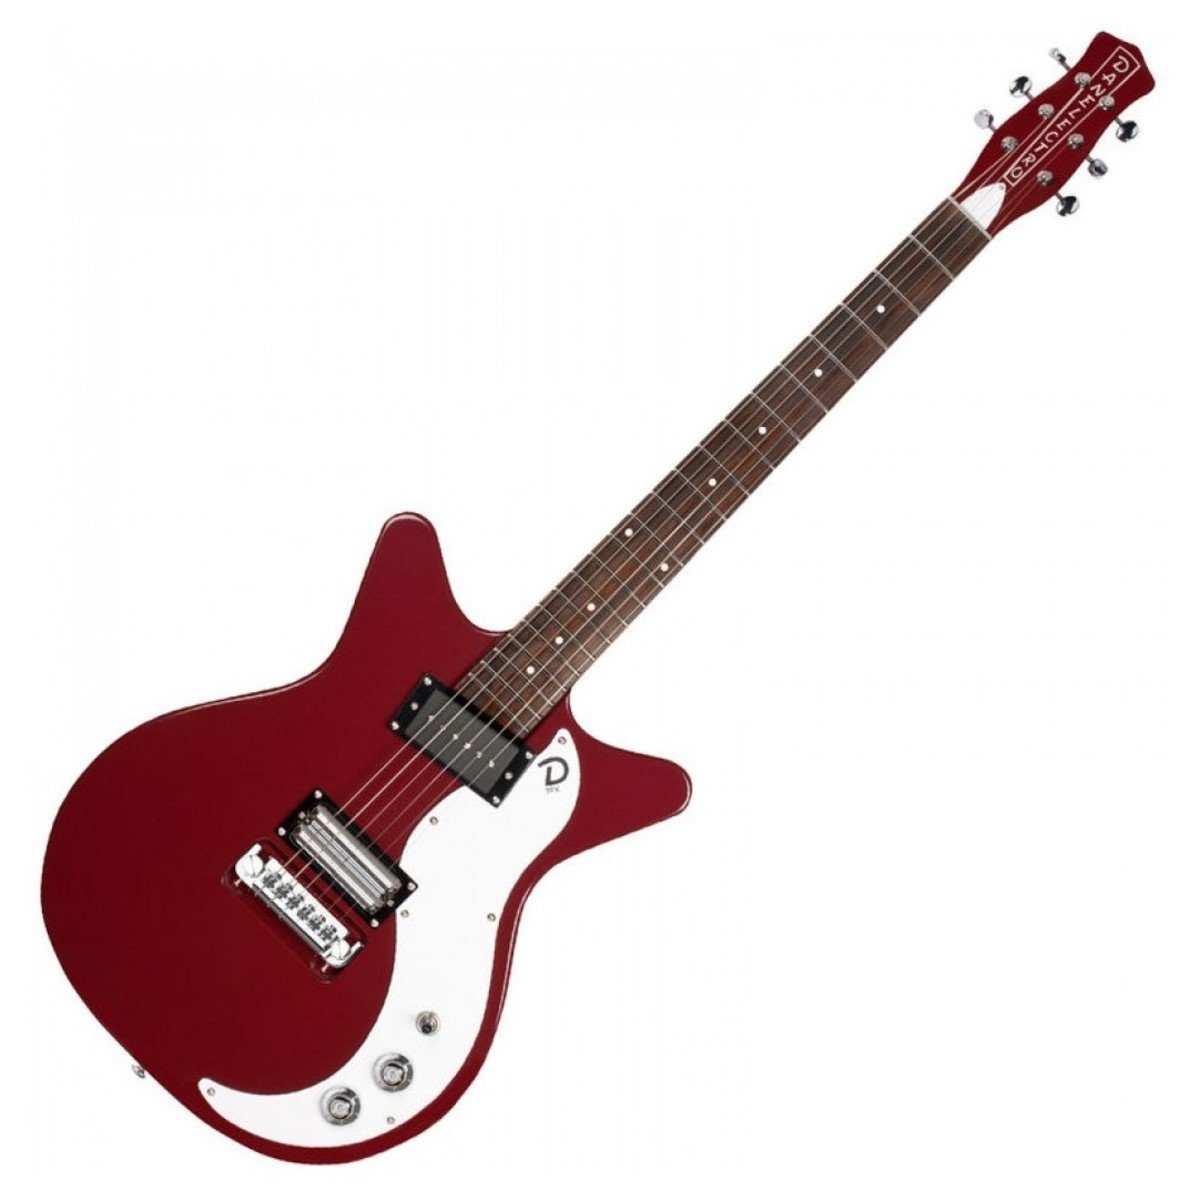 Danelectro 59X Guitar ~ Dark Red, Electric Guitar for sale at Richards Guitars.